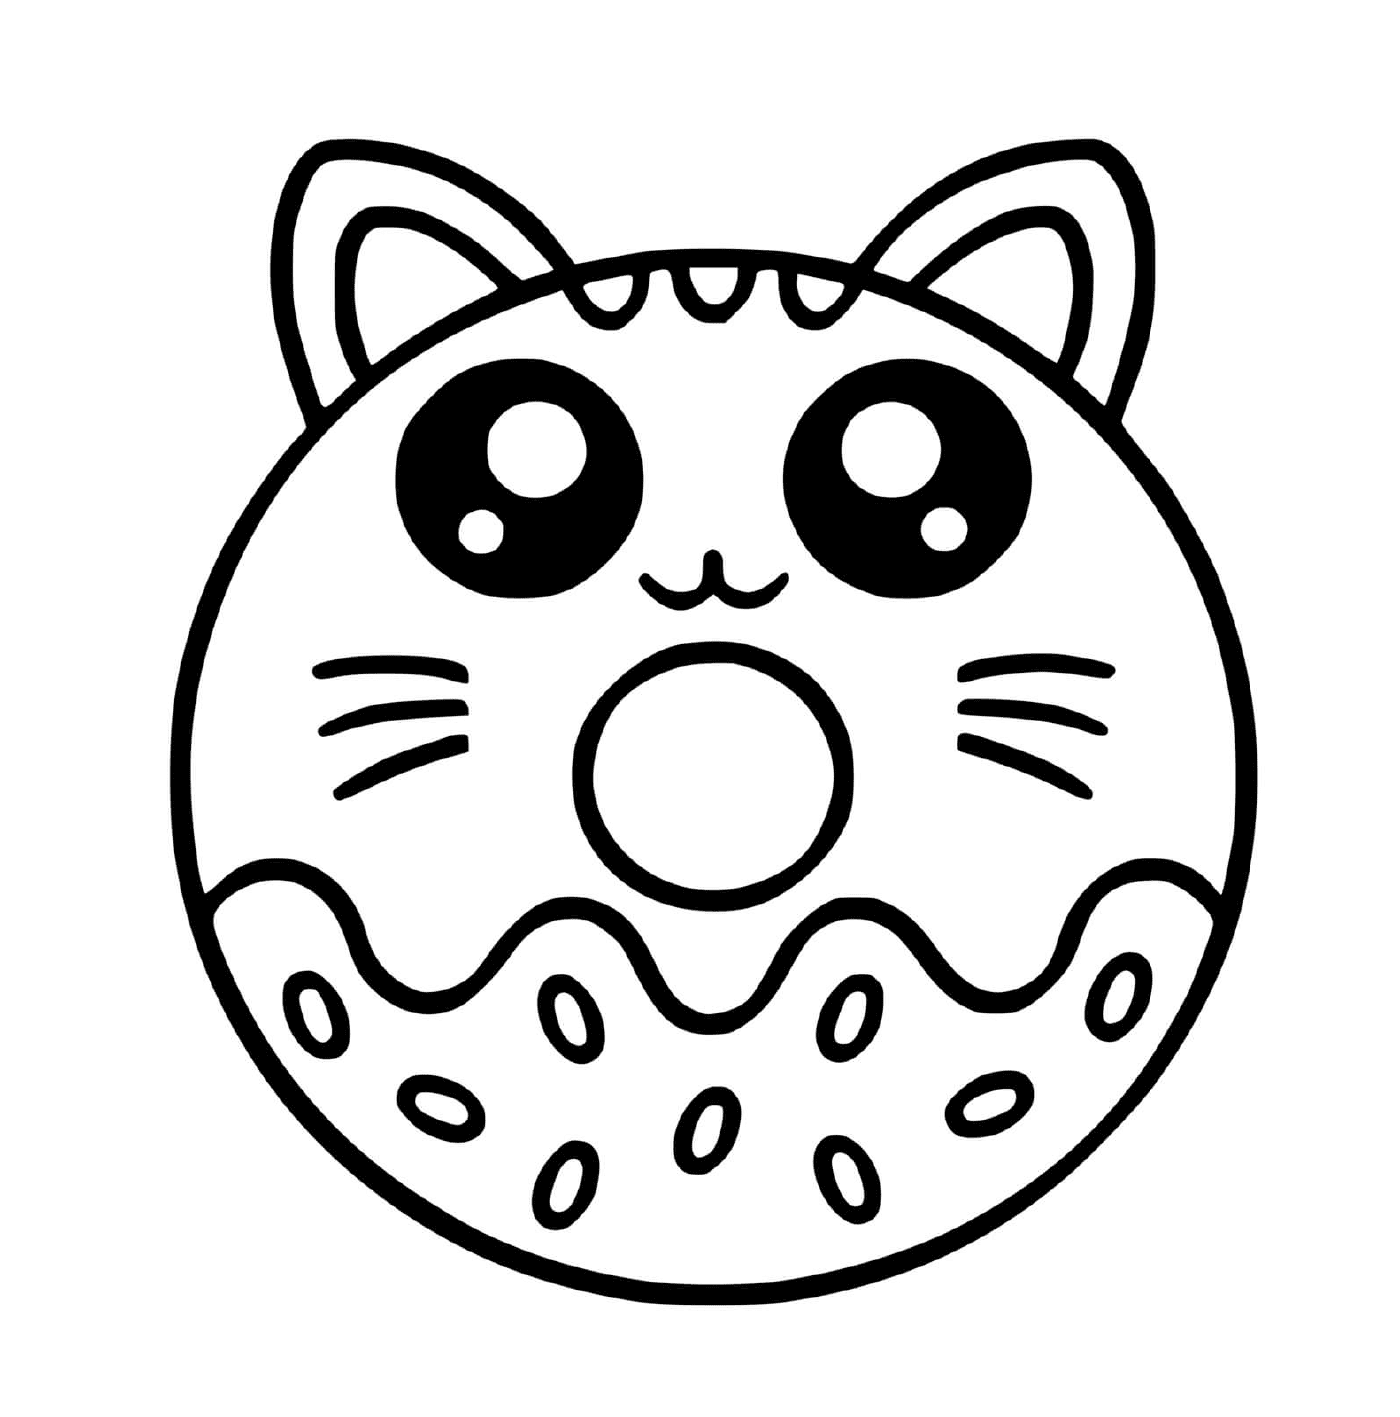   Donut-chat kawaii, gourmandise mignonne 